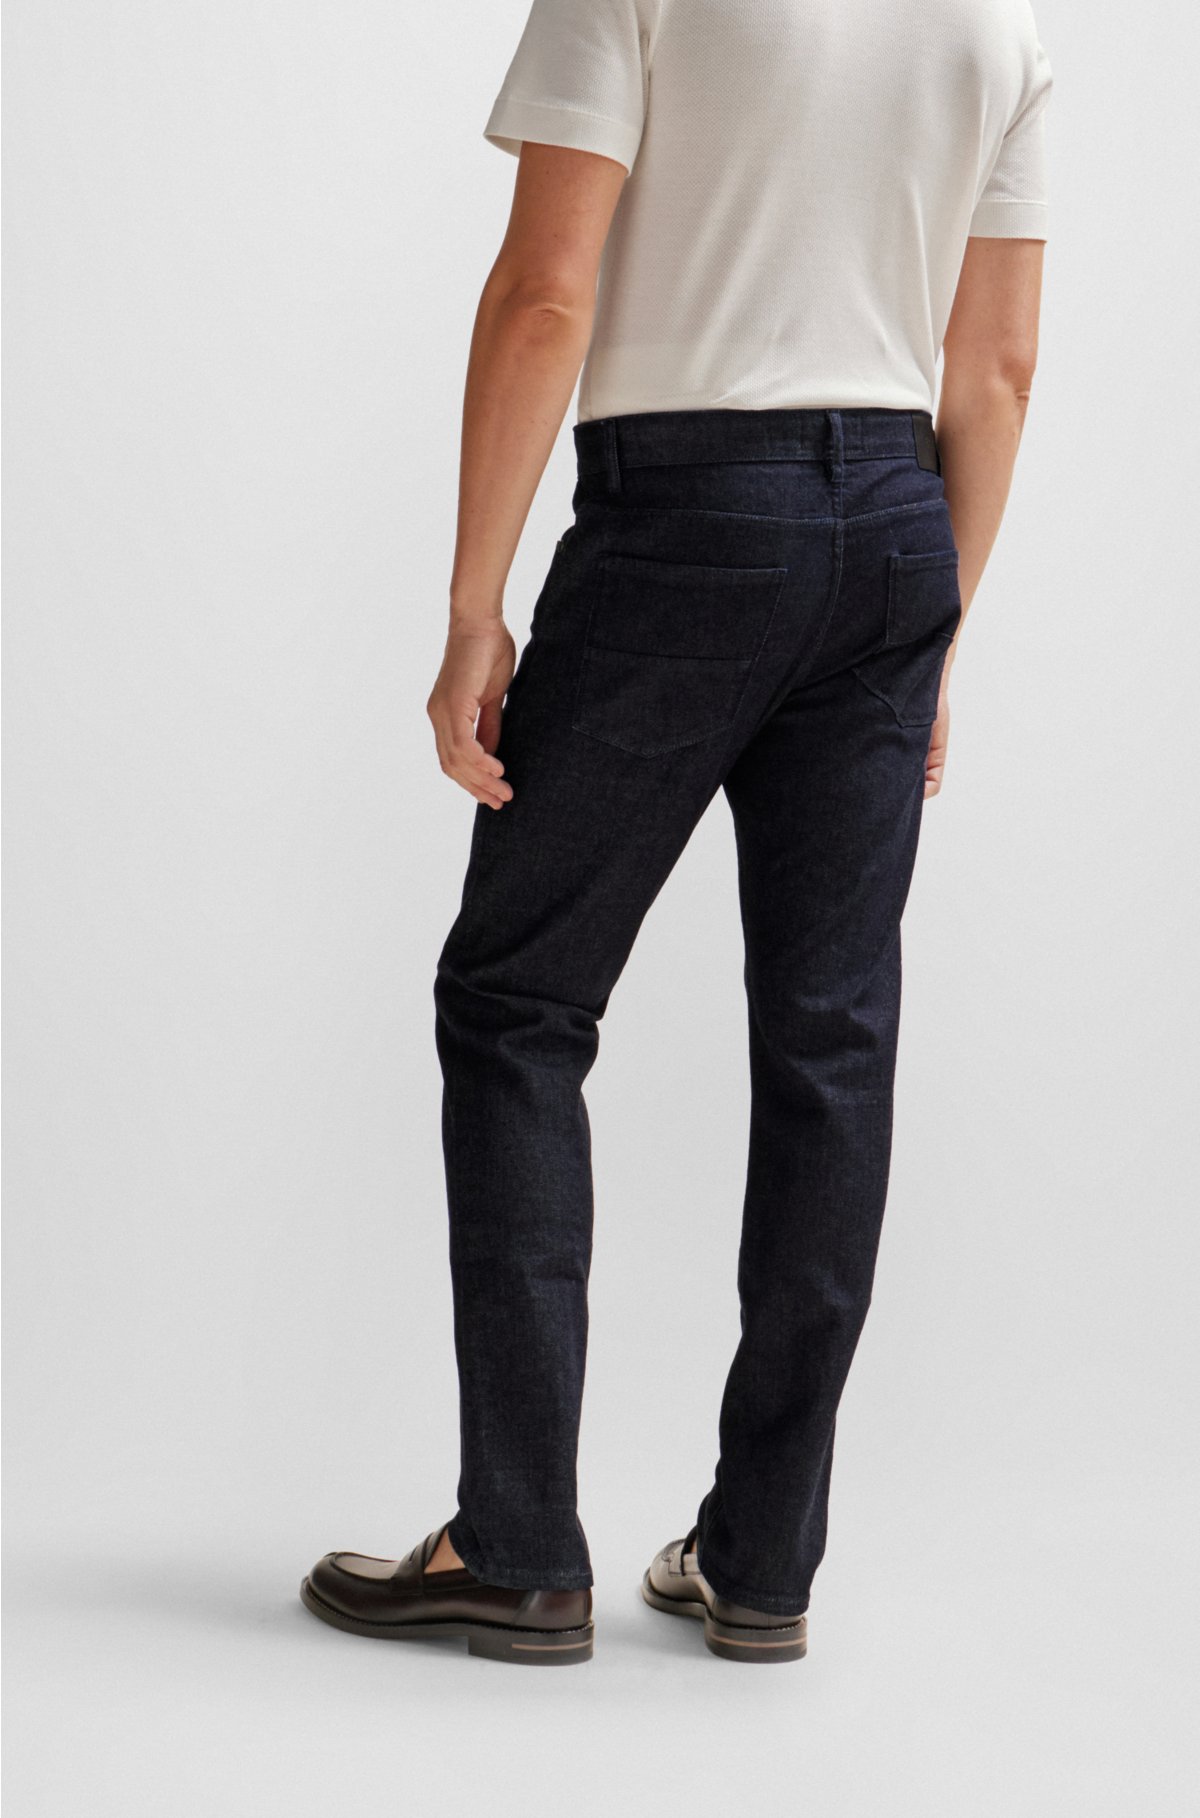 Shop Menswear Online - Hugo Boss slim fit mens jeans in dark blue